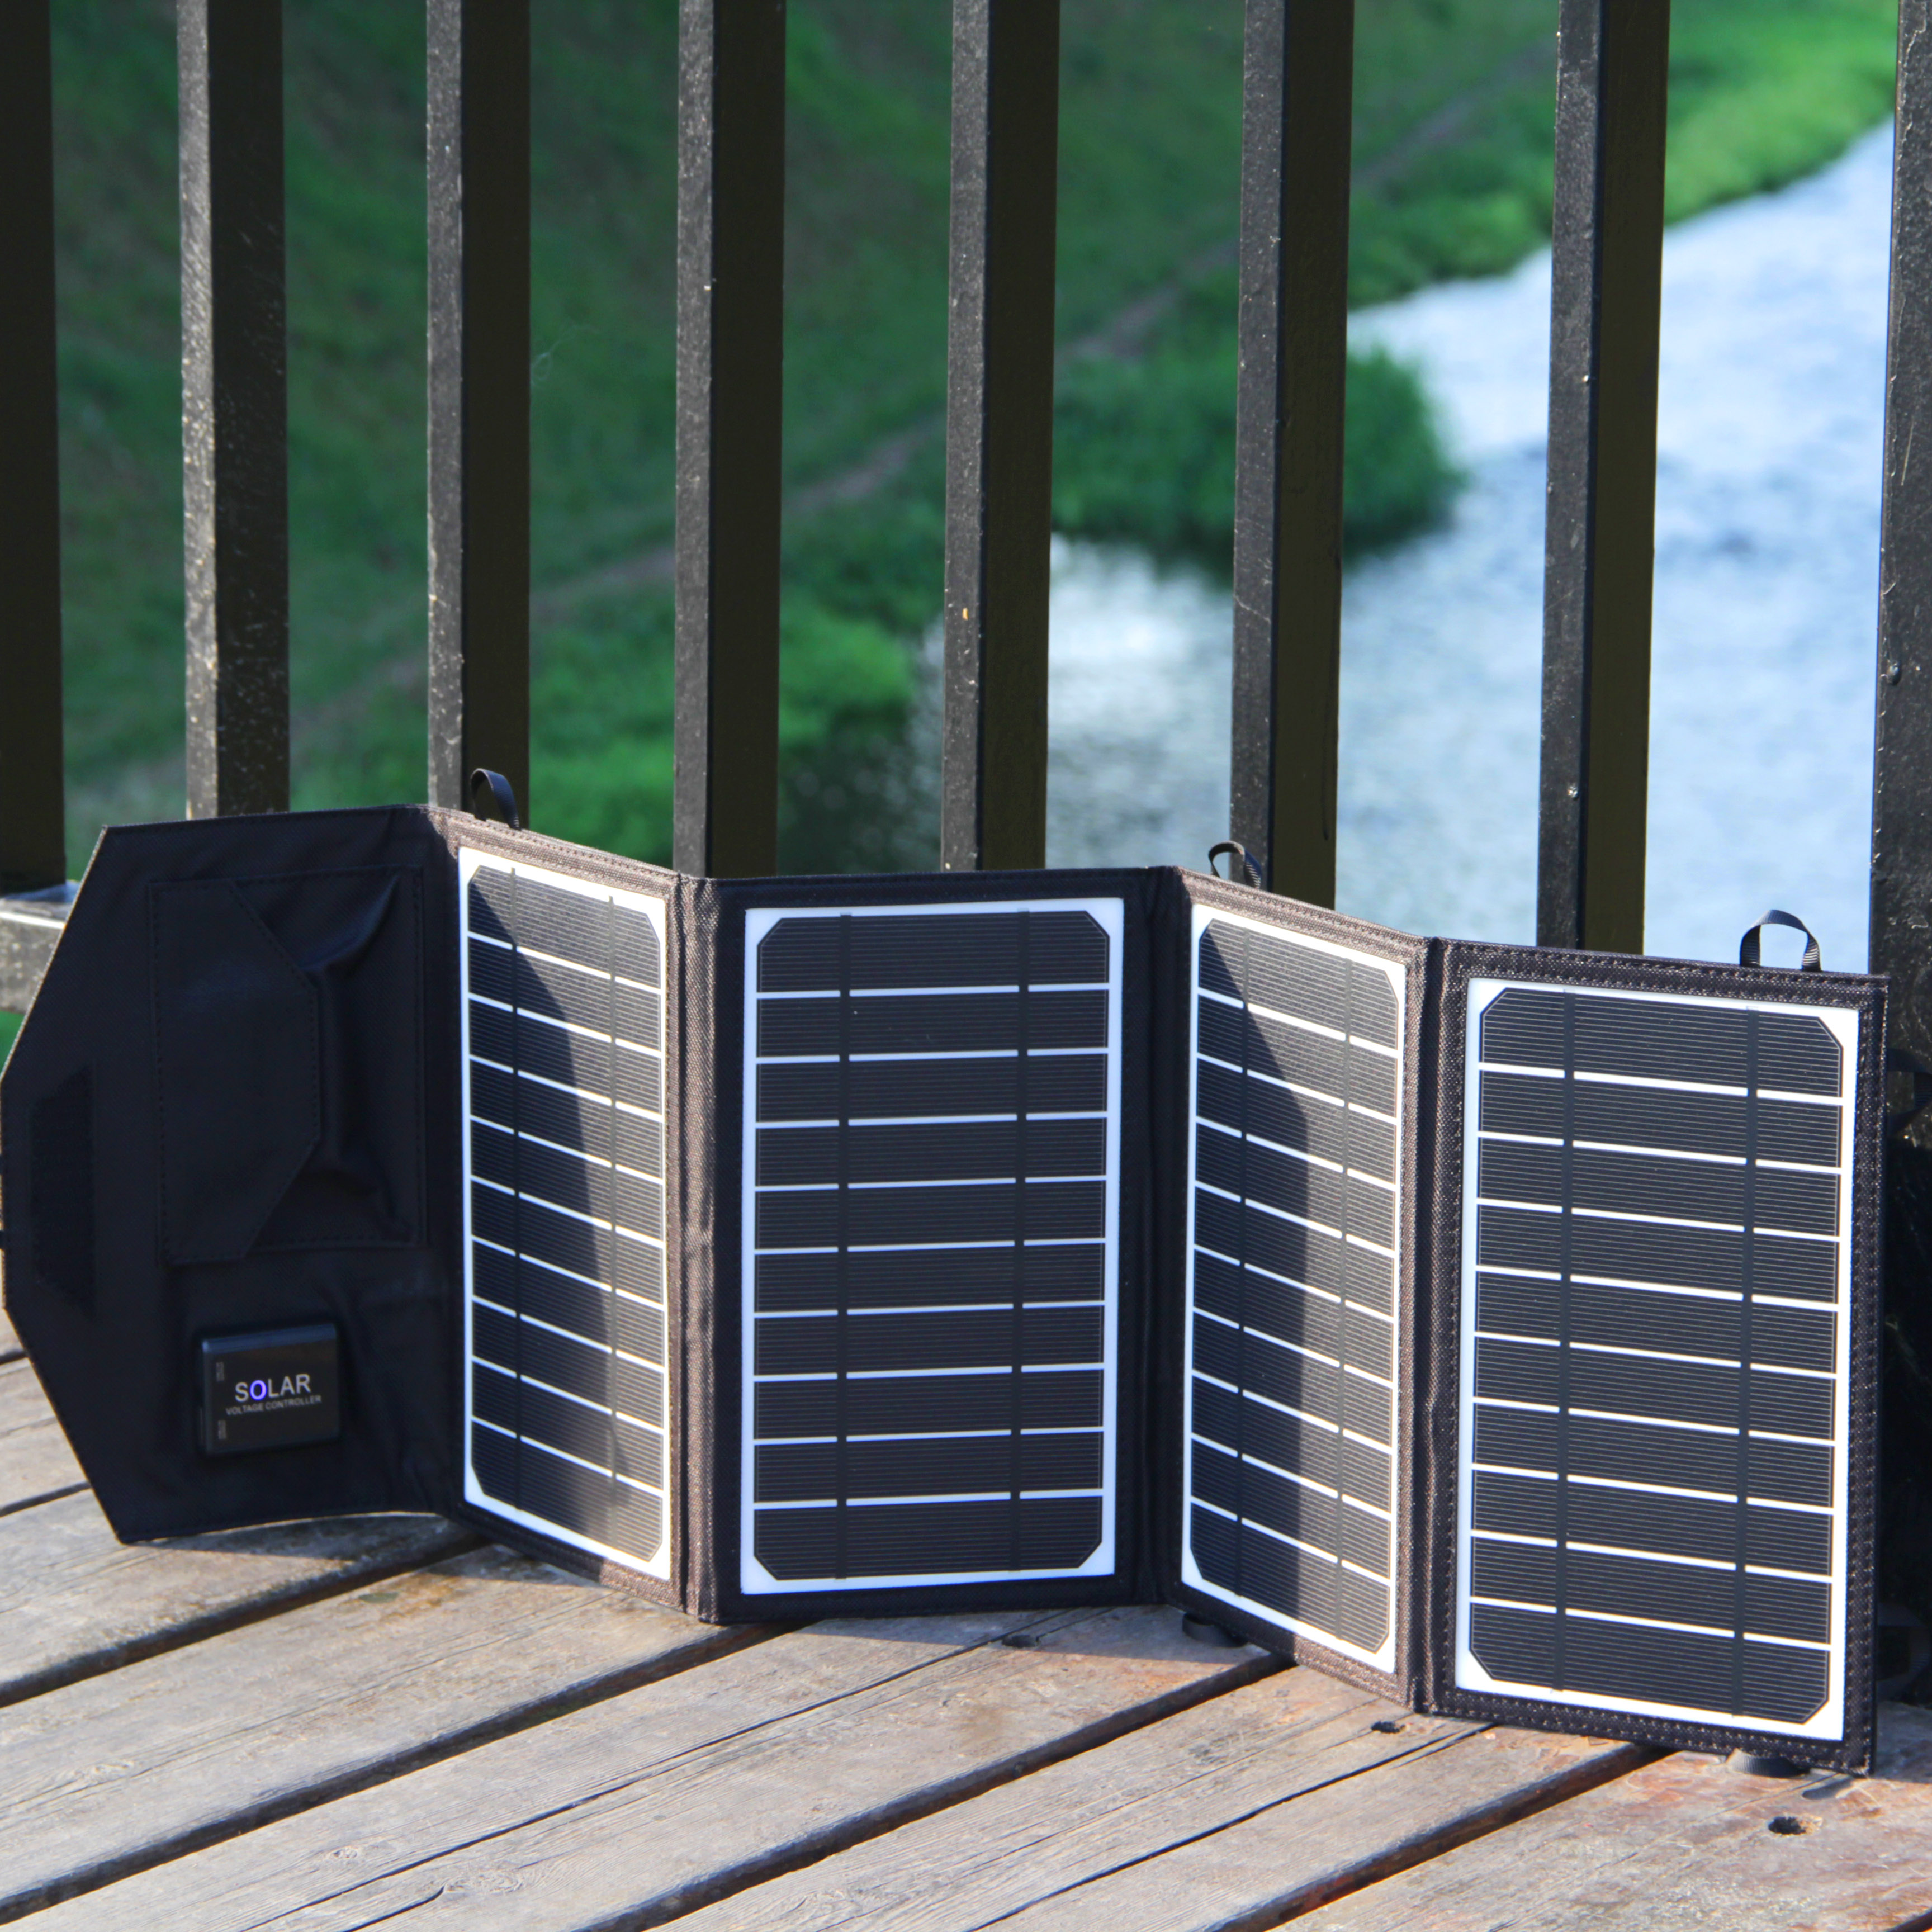 16Watt Foldable solar panel